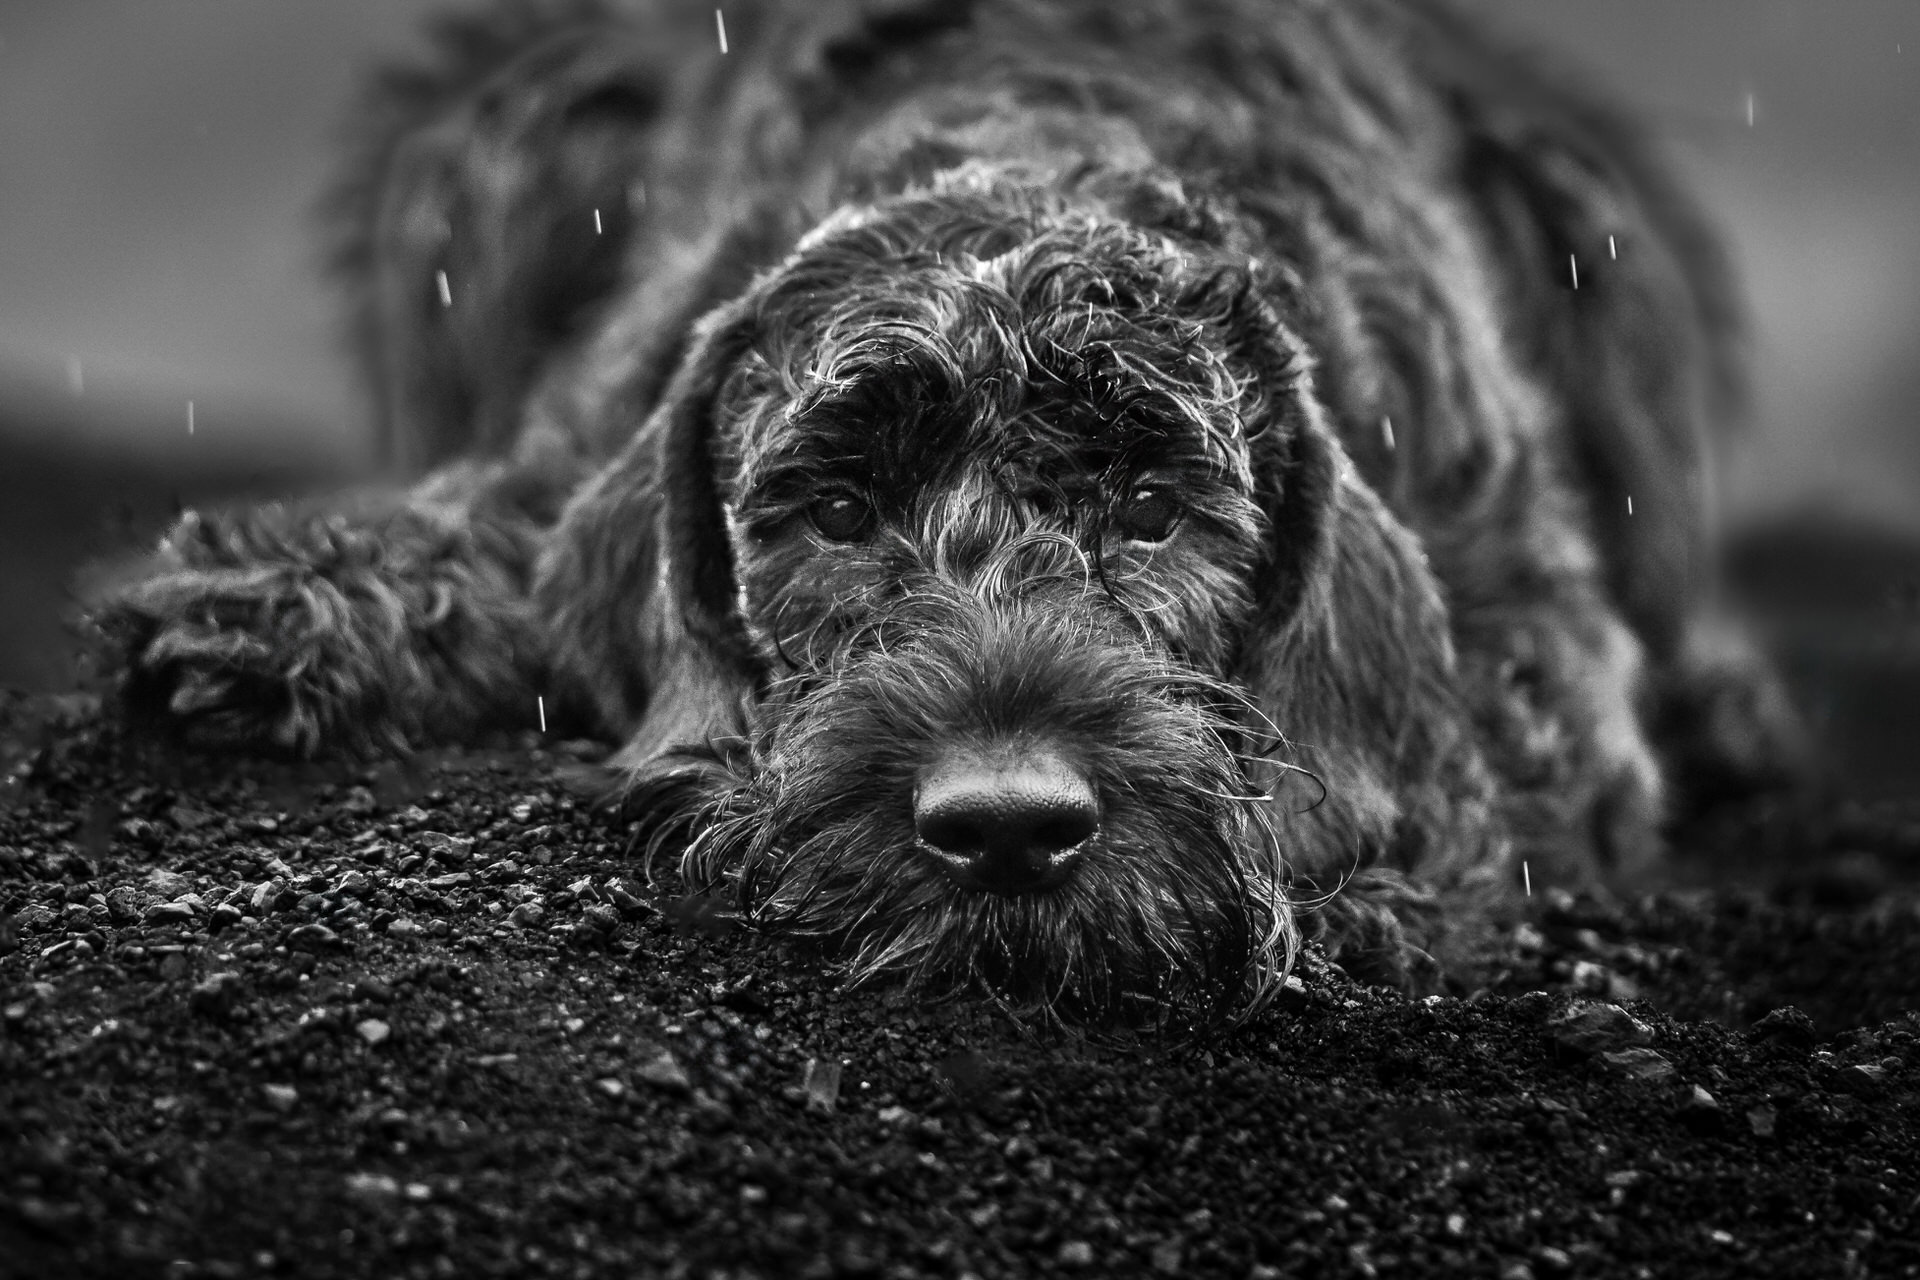 Wet dog lying down in rain, black and white photo.